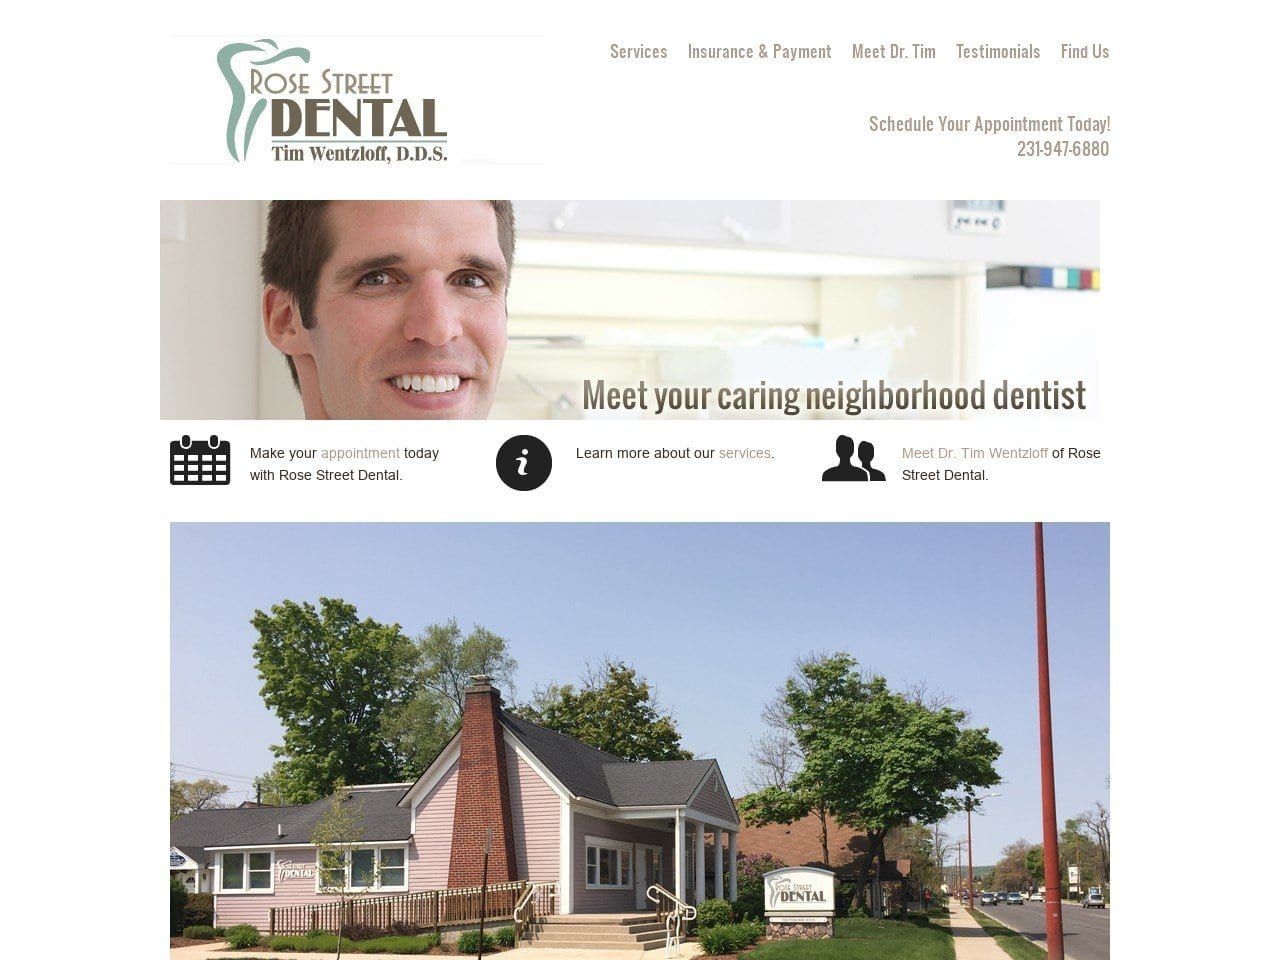 Rose Street Dental Website Screenshot from rosestreetdental.com